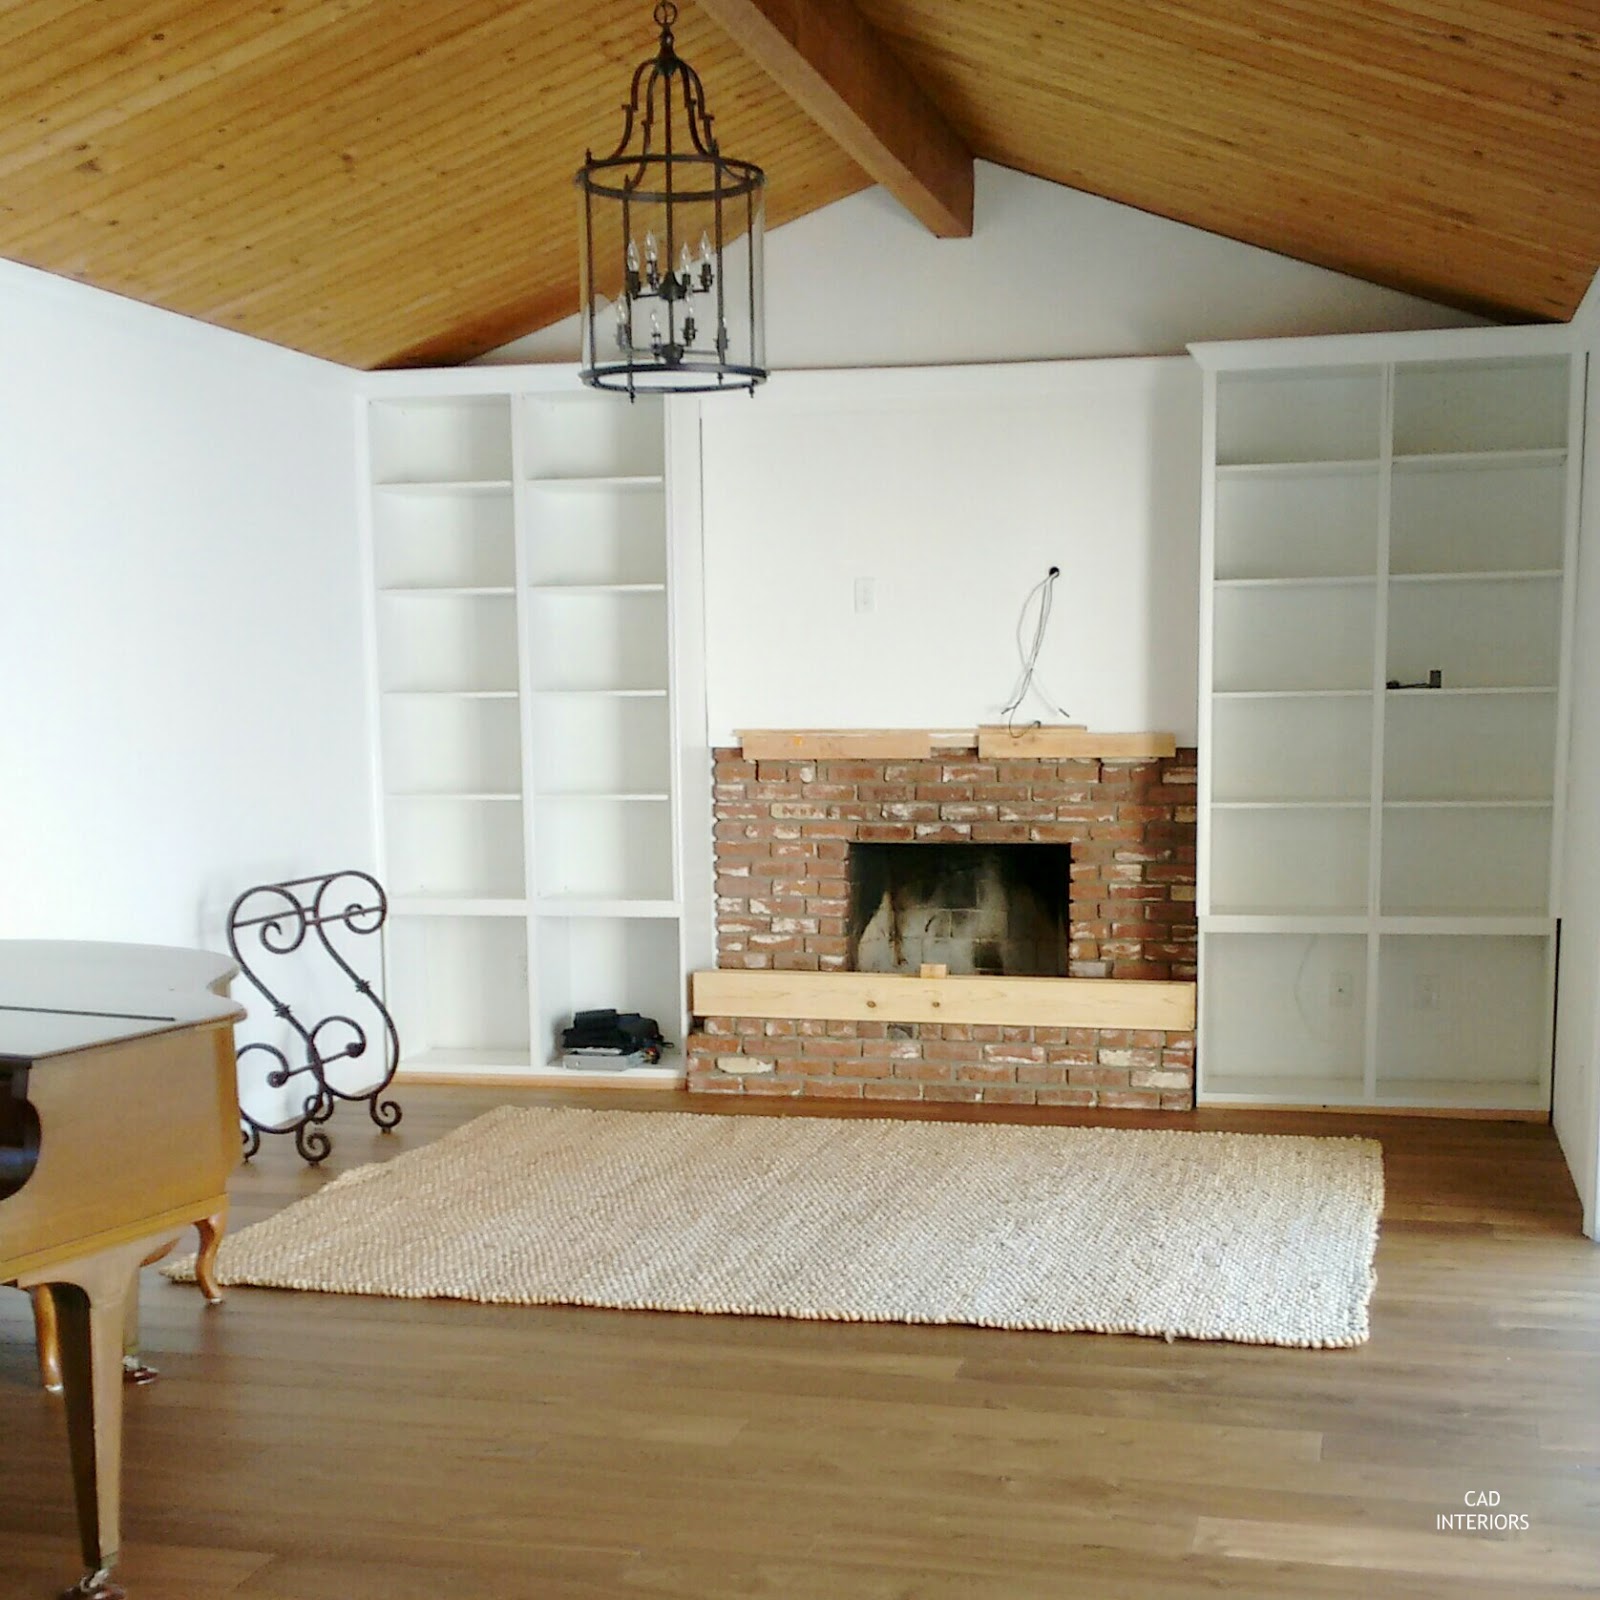 Ikea built-ins white walls natural woven texture jute rug european oak wide plank floors